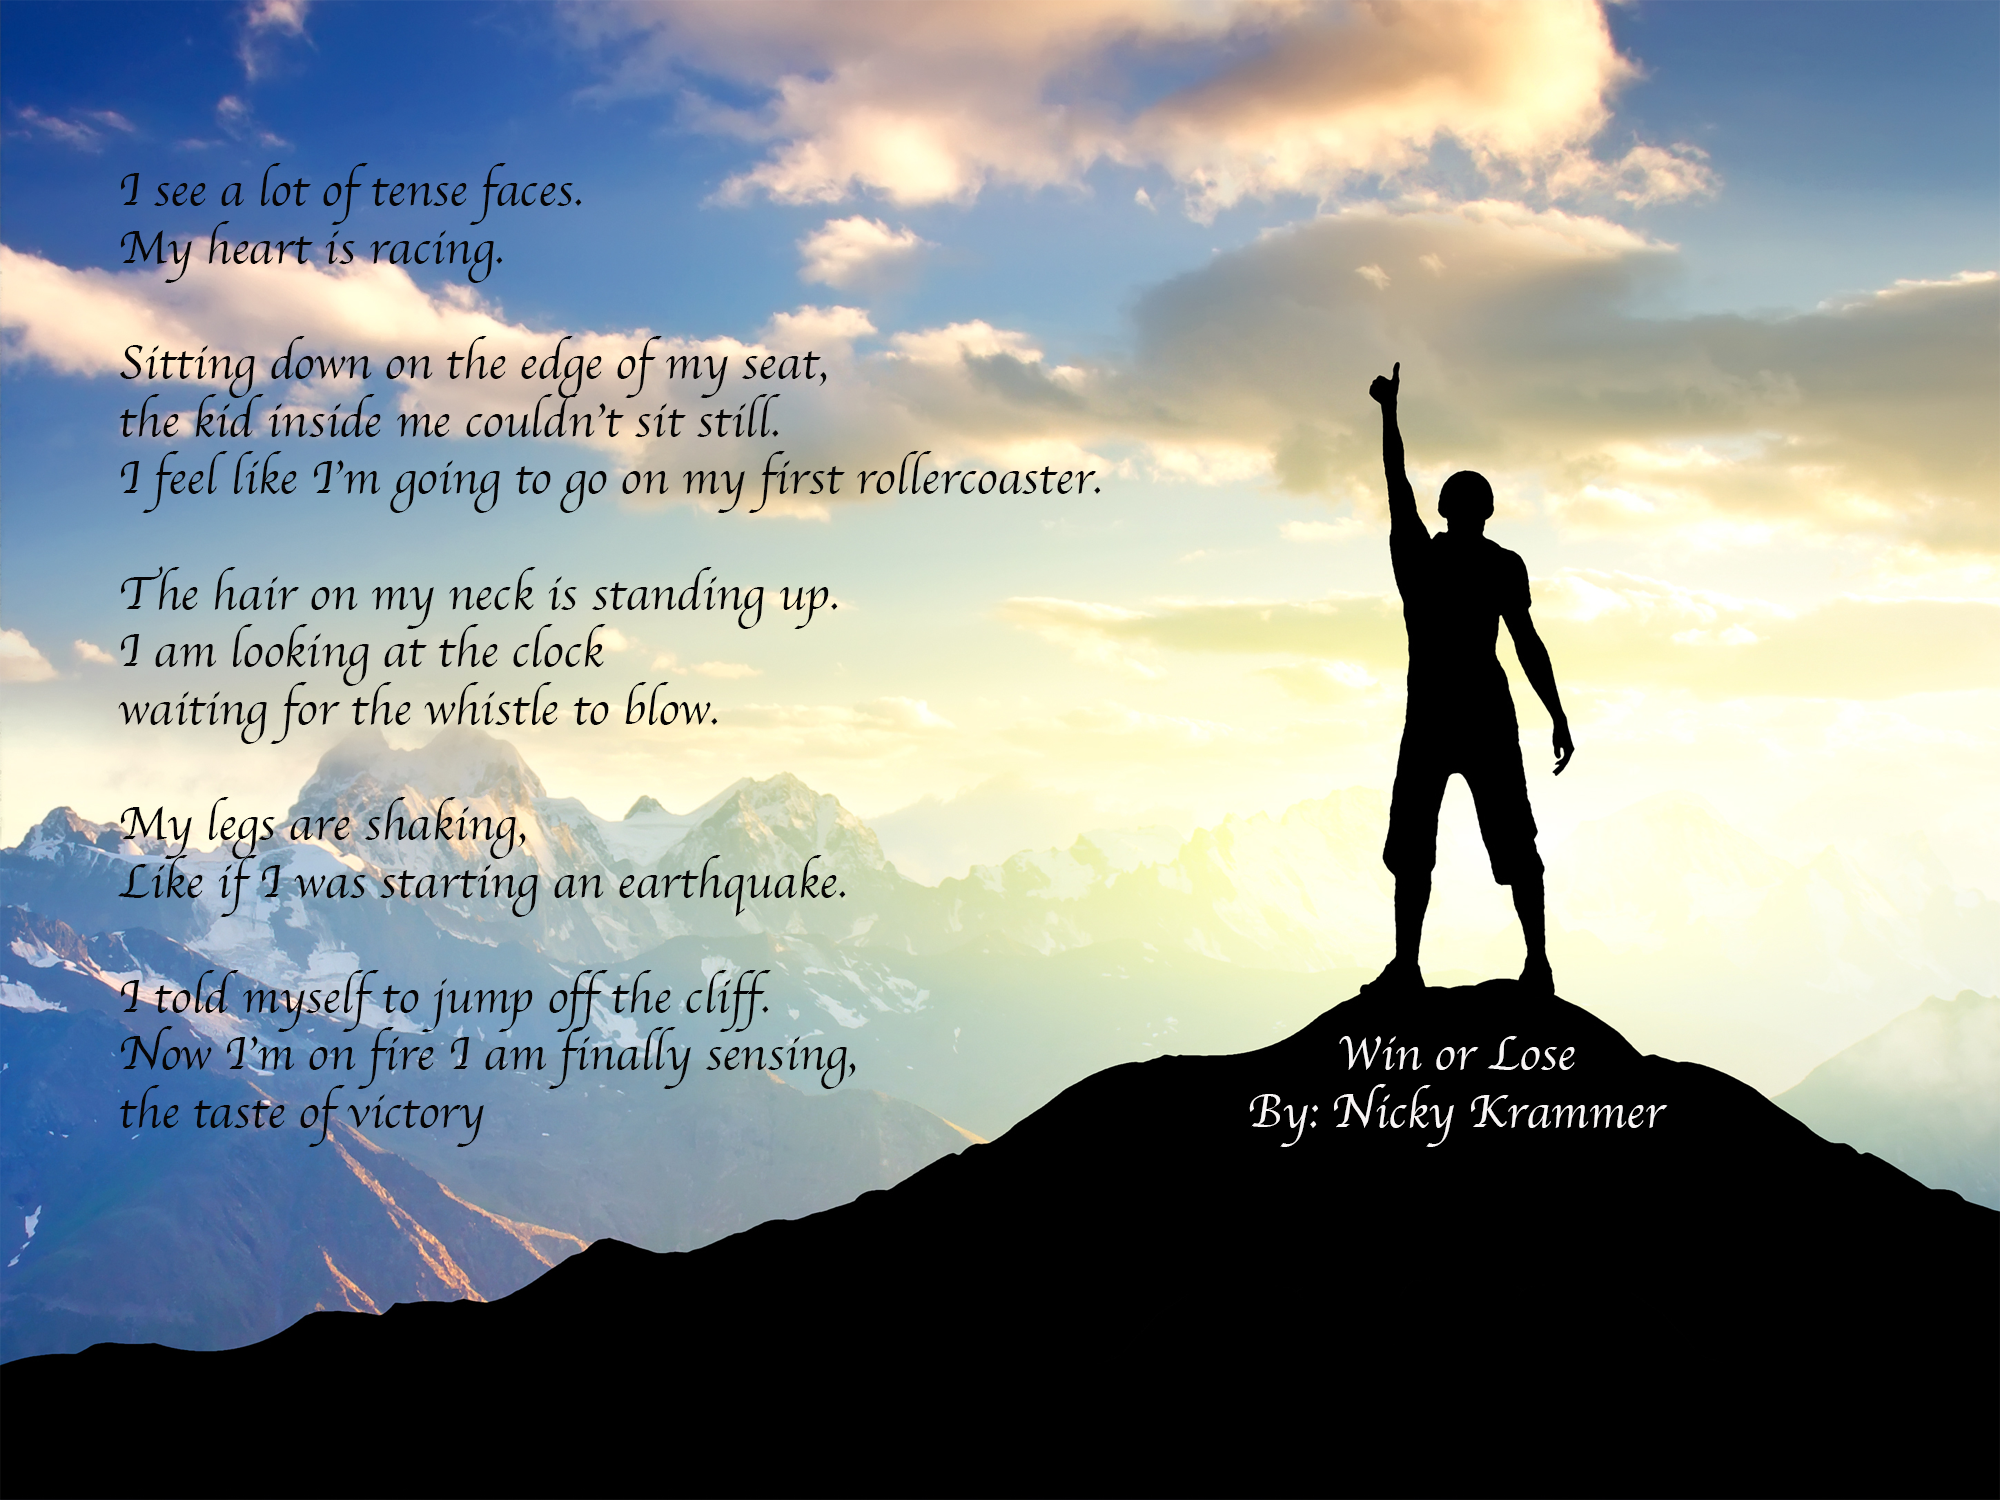 Poem by Nicky Krammer Win or Lose!!!